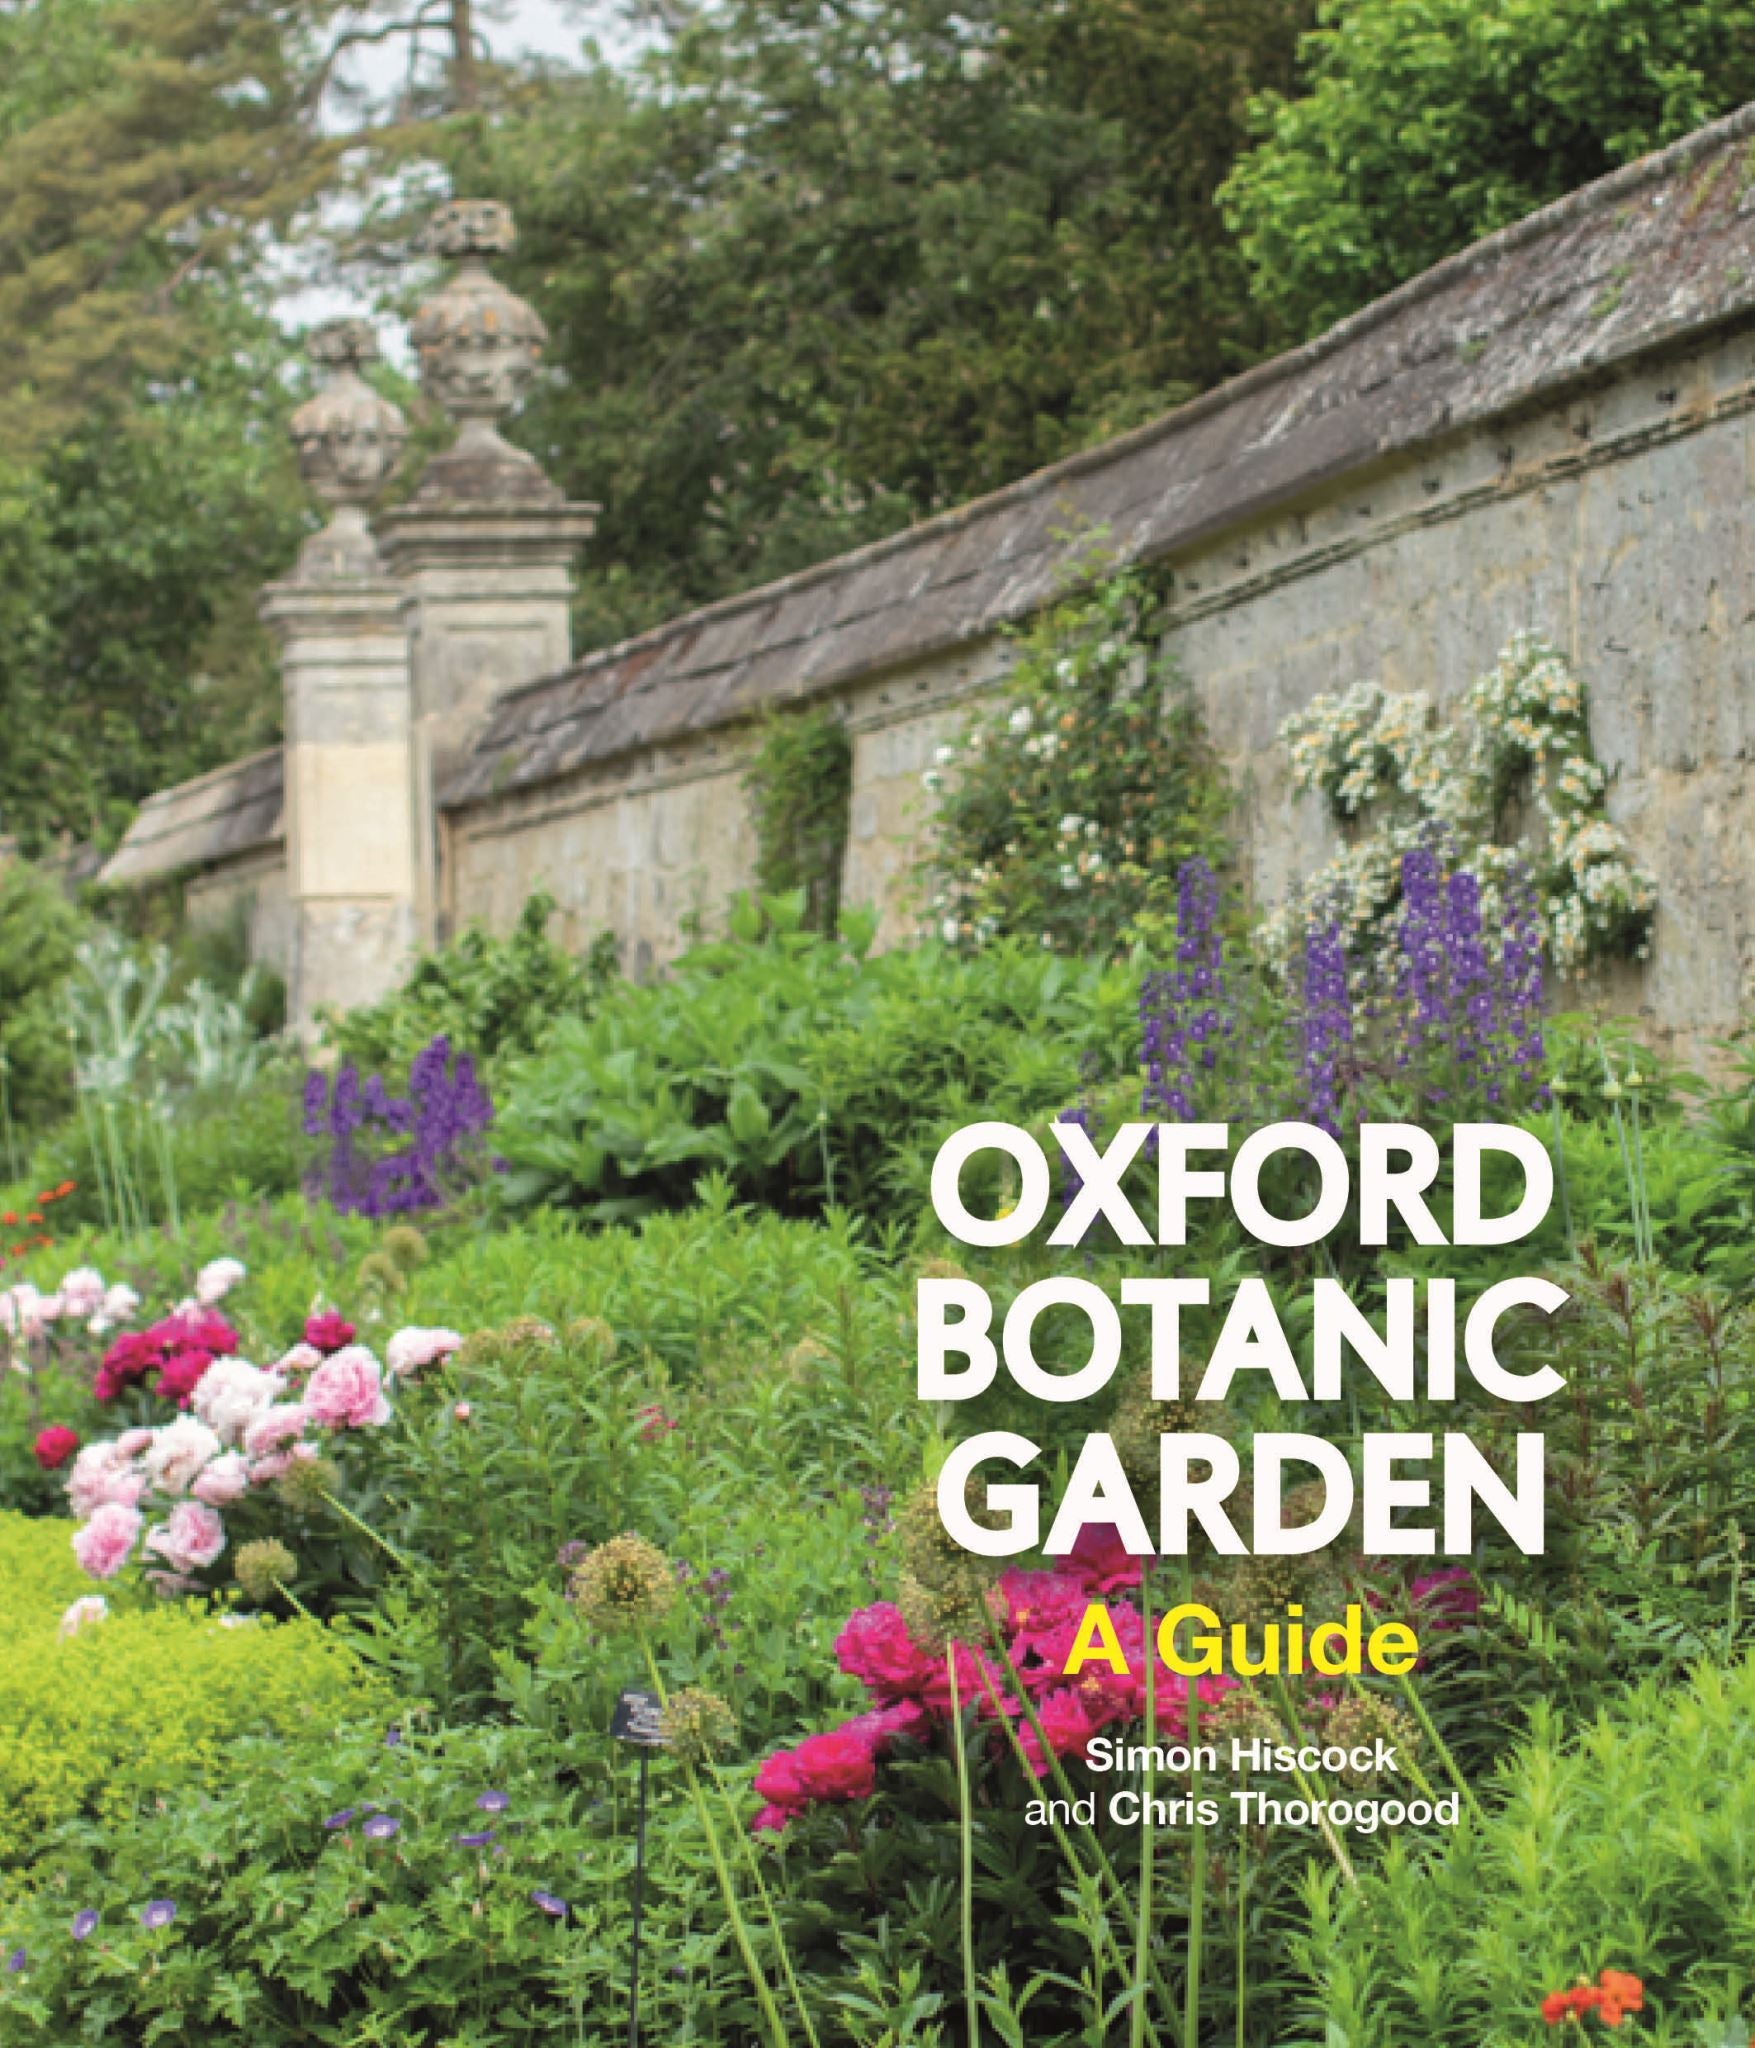 Oxford Botanic Garden